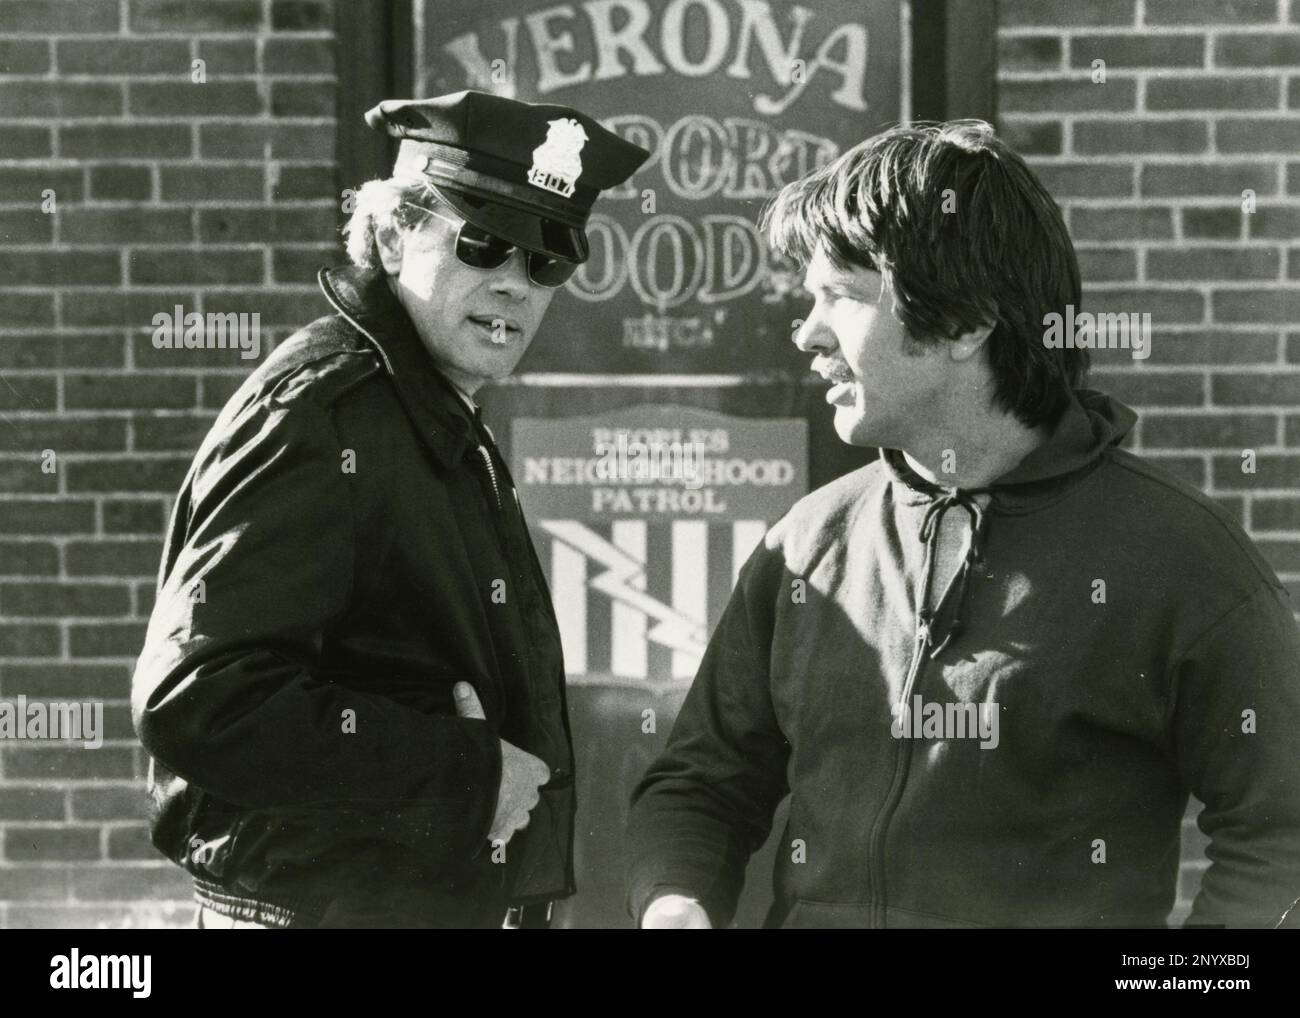 Acteur Tom Skerritt dans le film Fighting Back, USA 1982 Banque D'Images